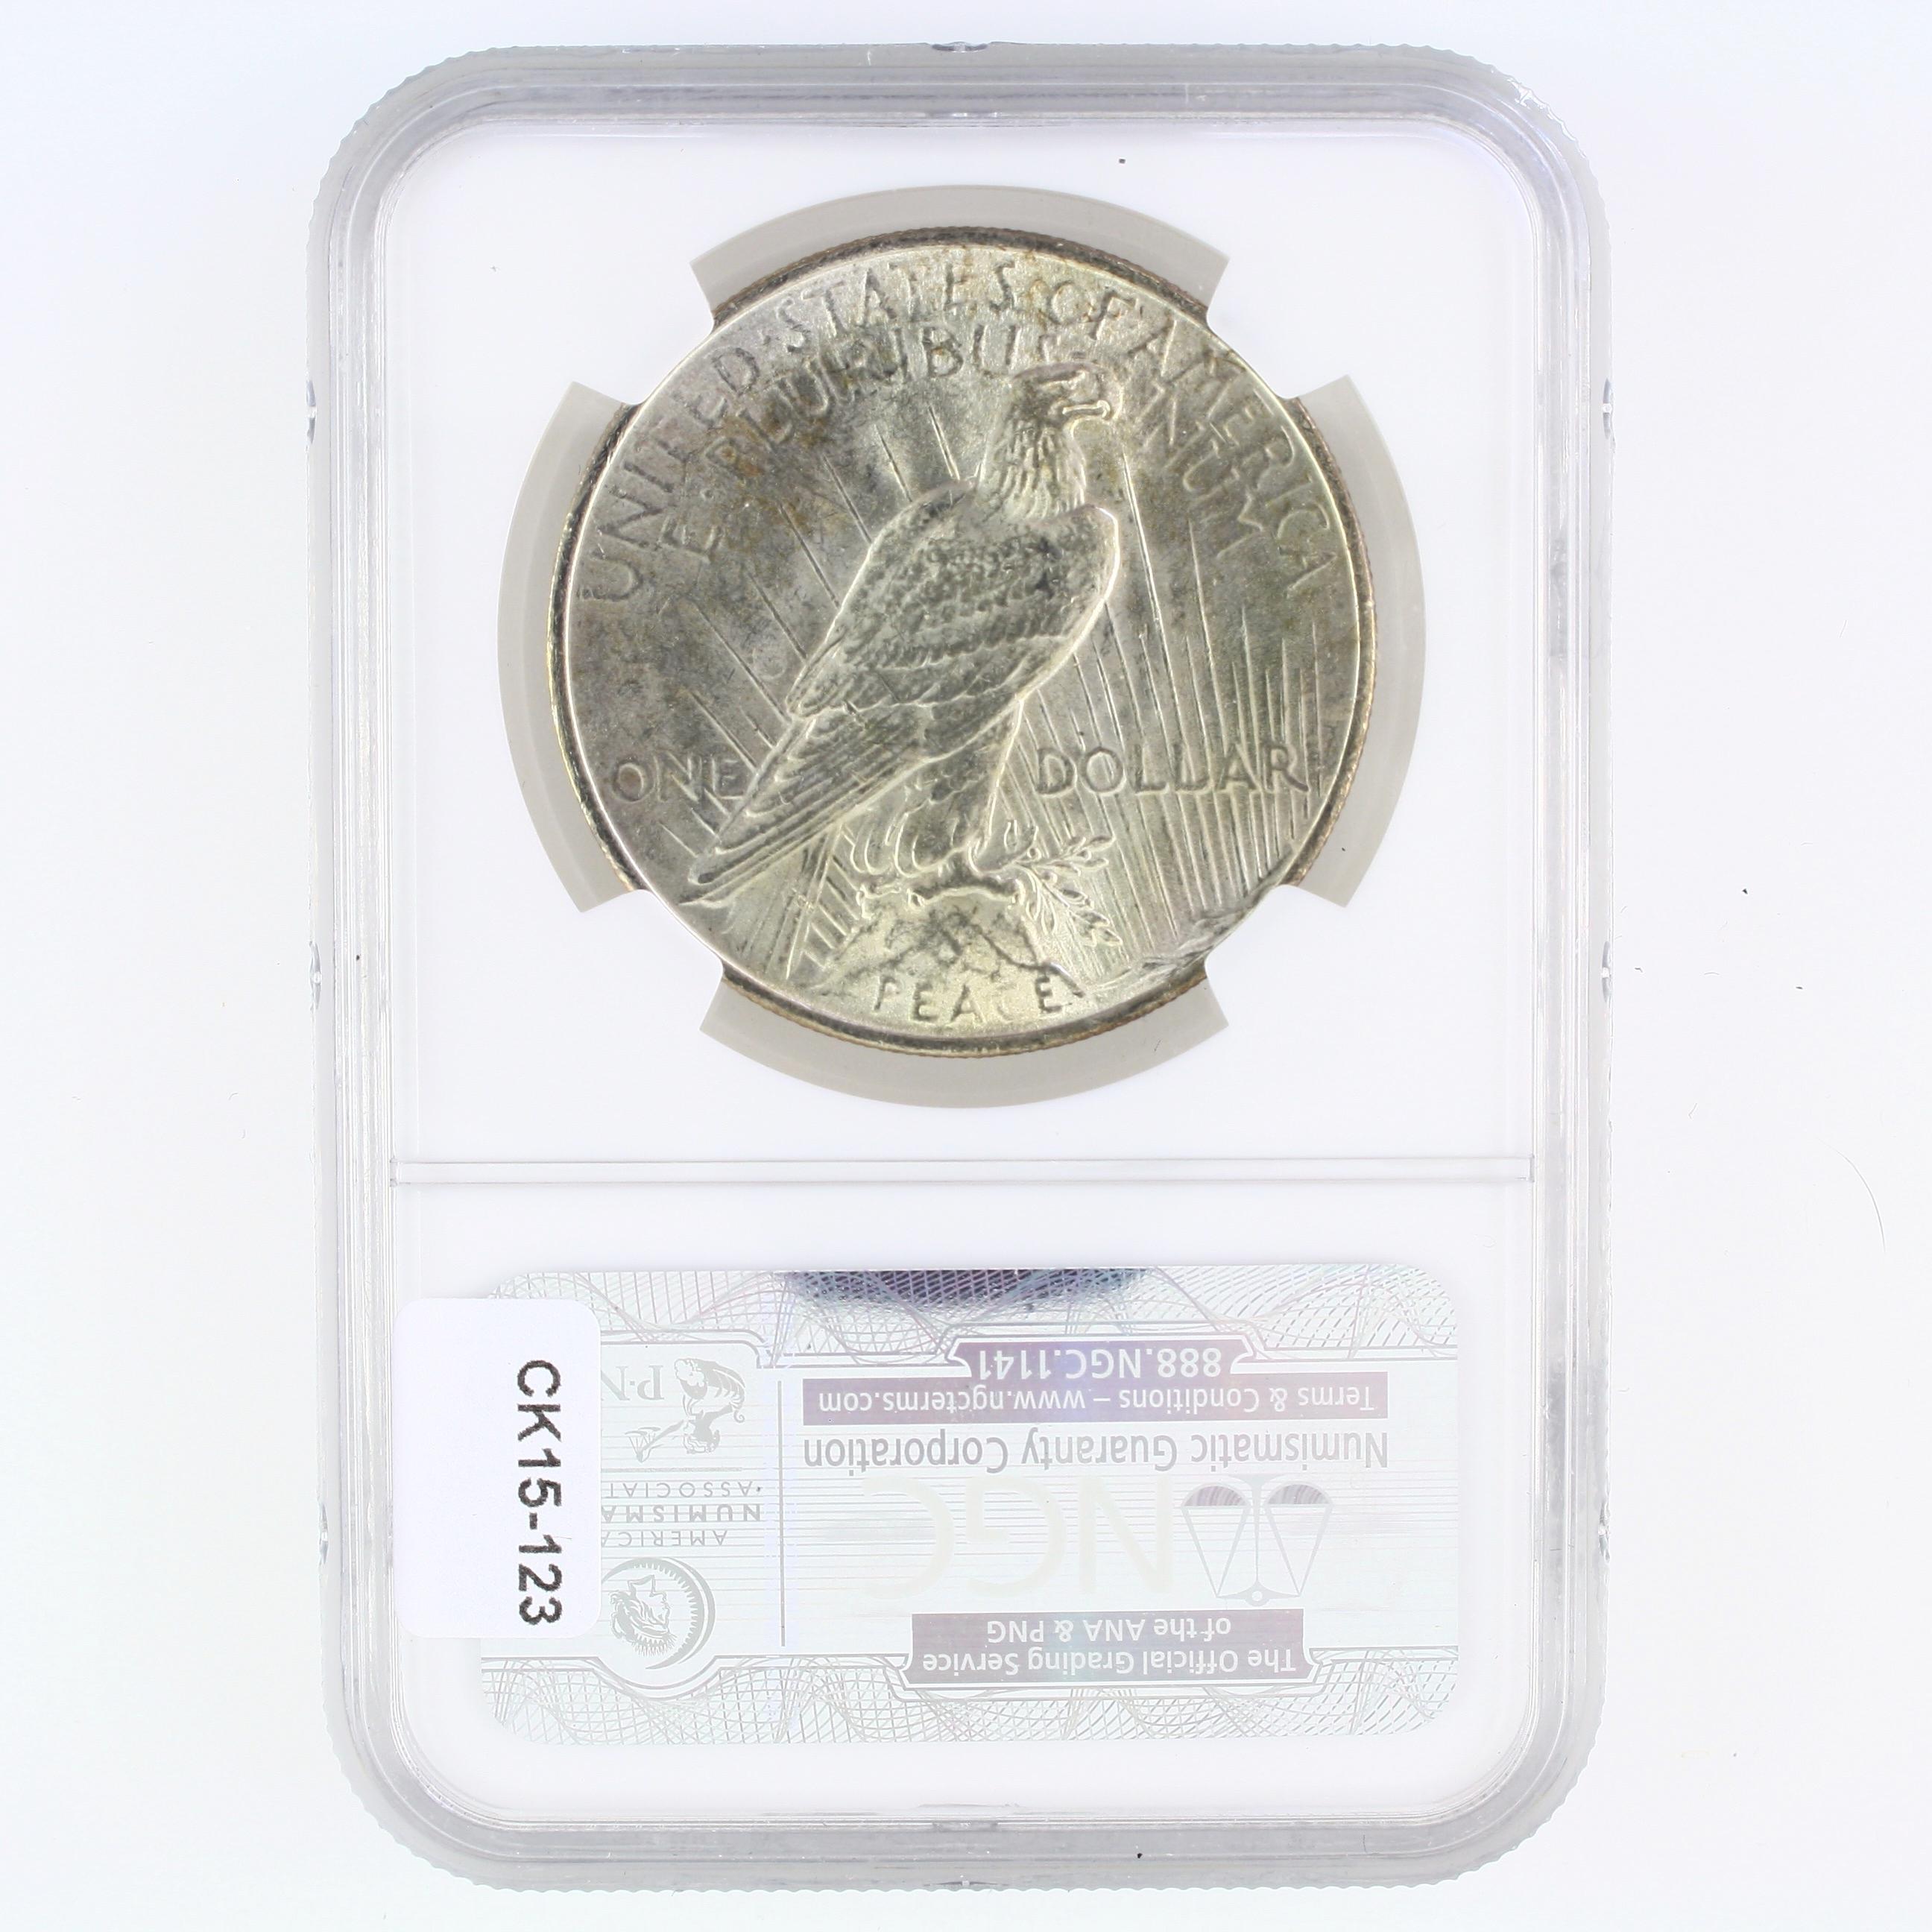 Certified 1923 U.S. peace silver dollar